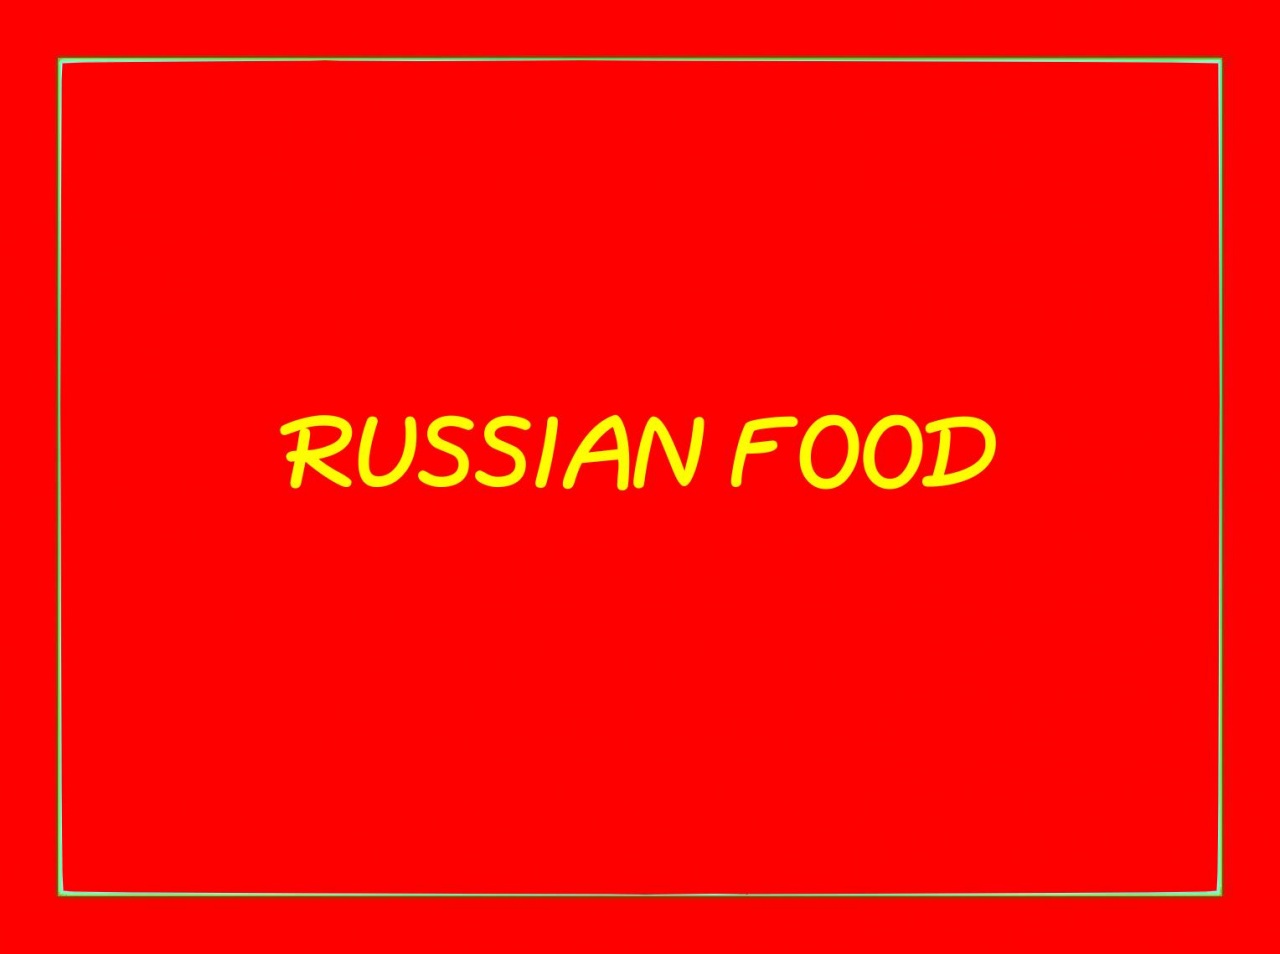 RUSSIAN FOOD